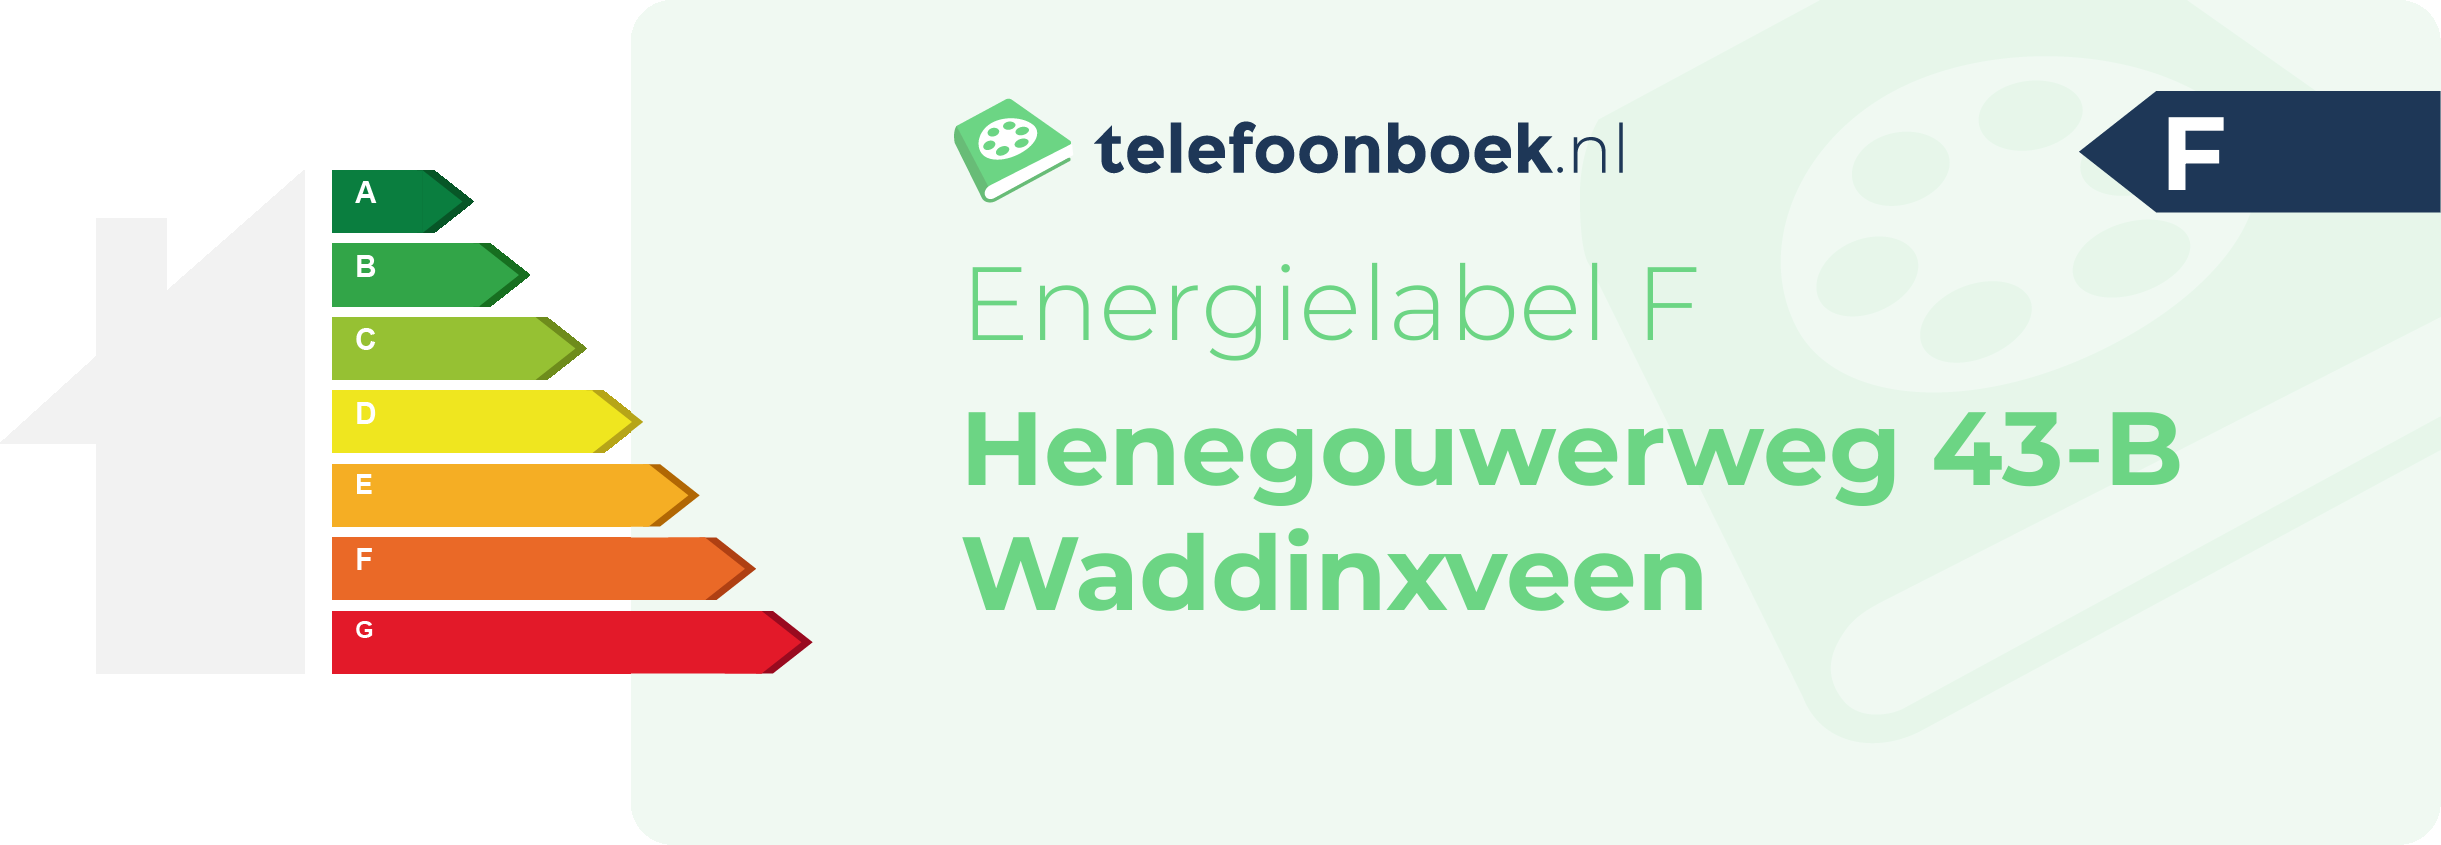 Energielabel Henegouwerweg 43-B Waddinxveen